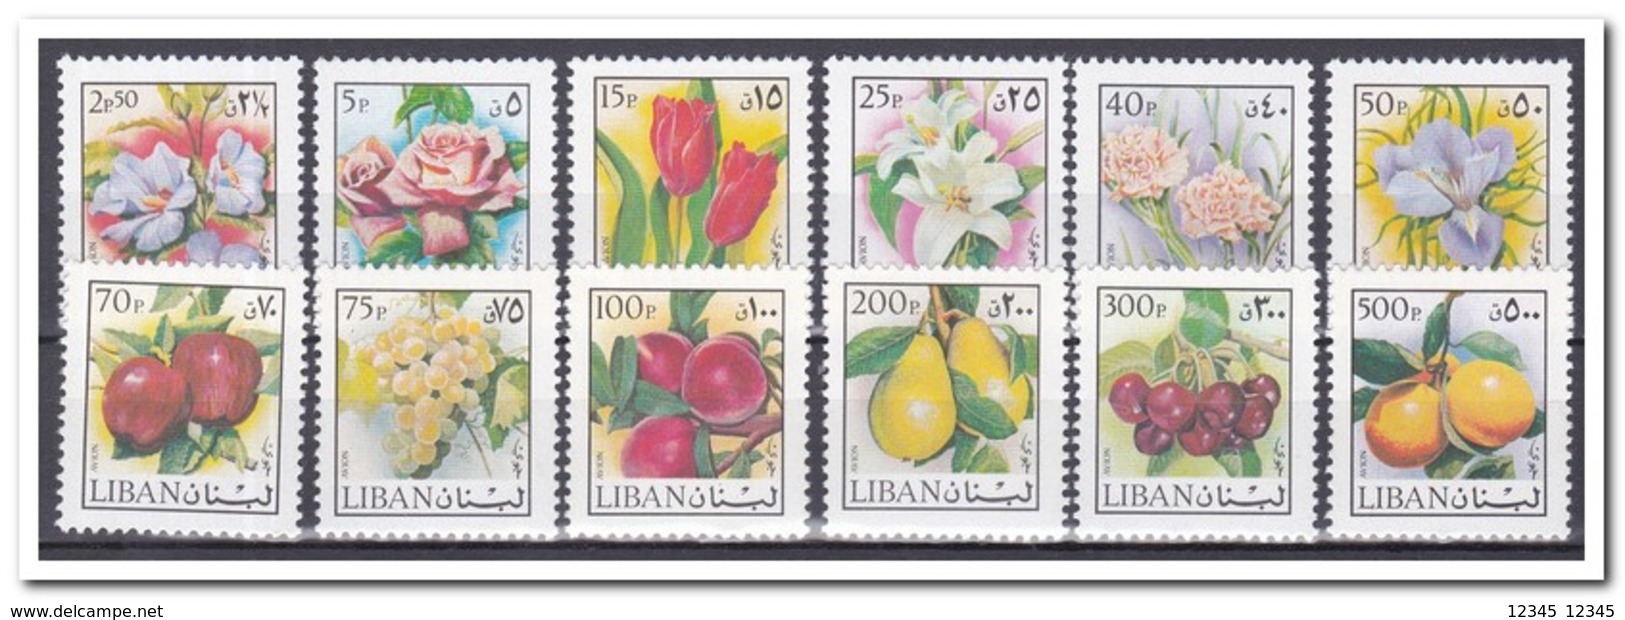 Libanon 1973, Postfris MNH, Fruit, Flowers - Libanon